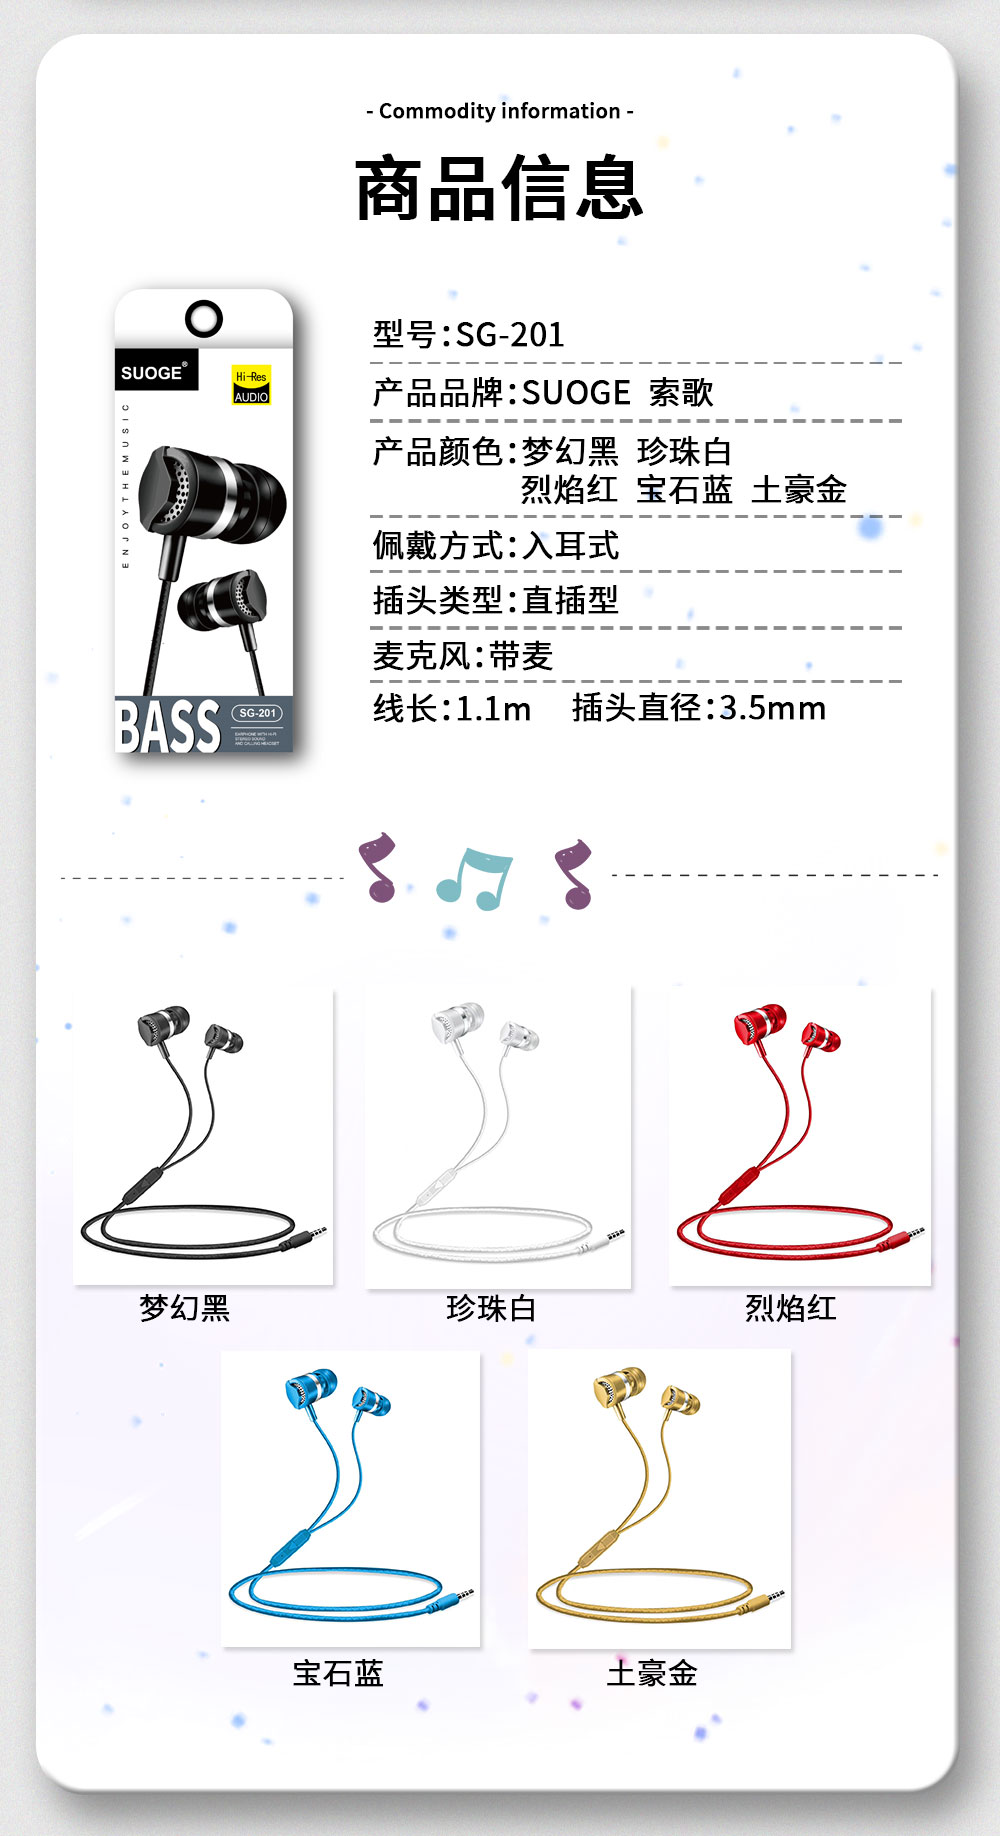 SUOGE索歌品牌SG-201手机耳机详情2